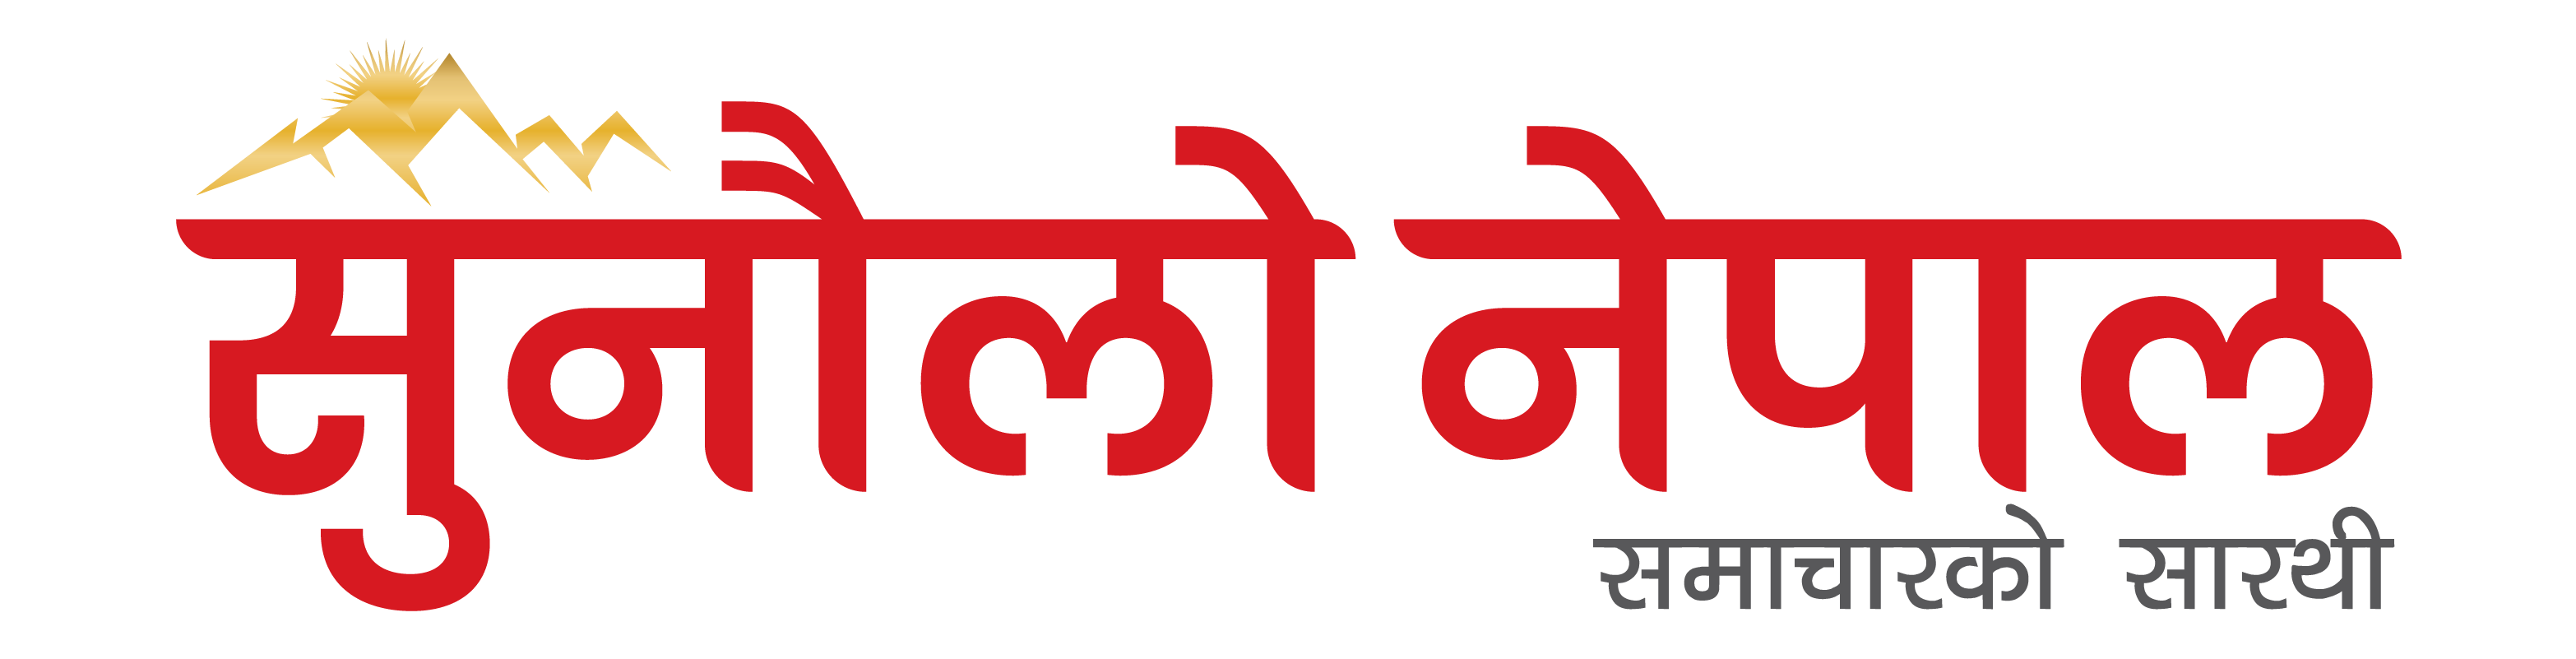 Online Nepal